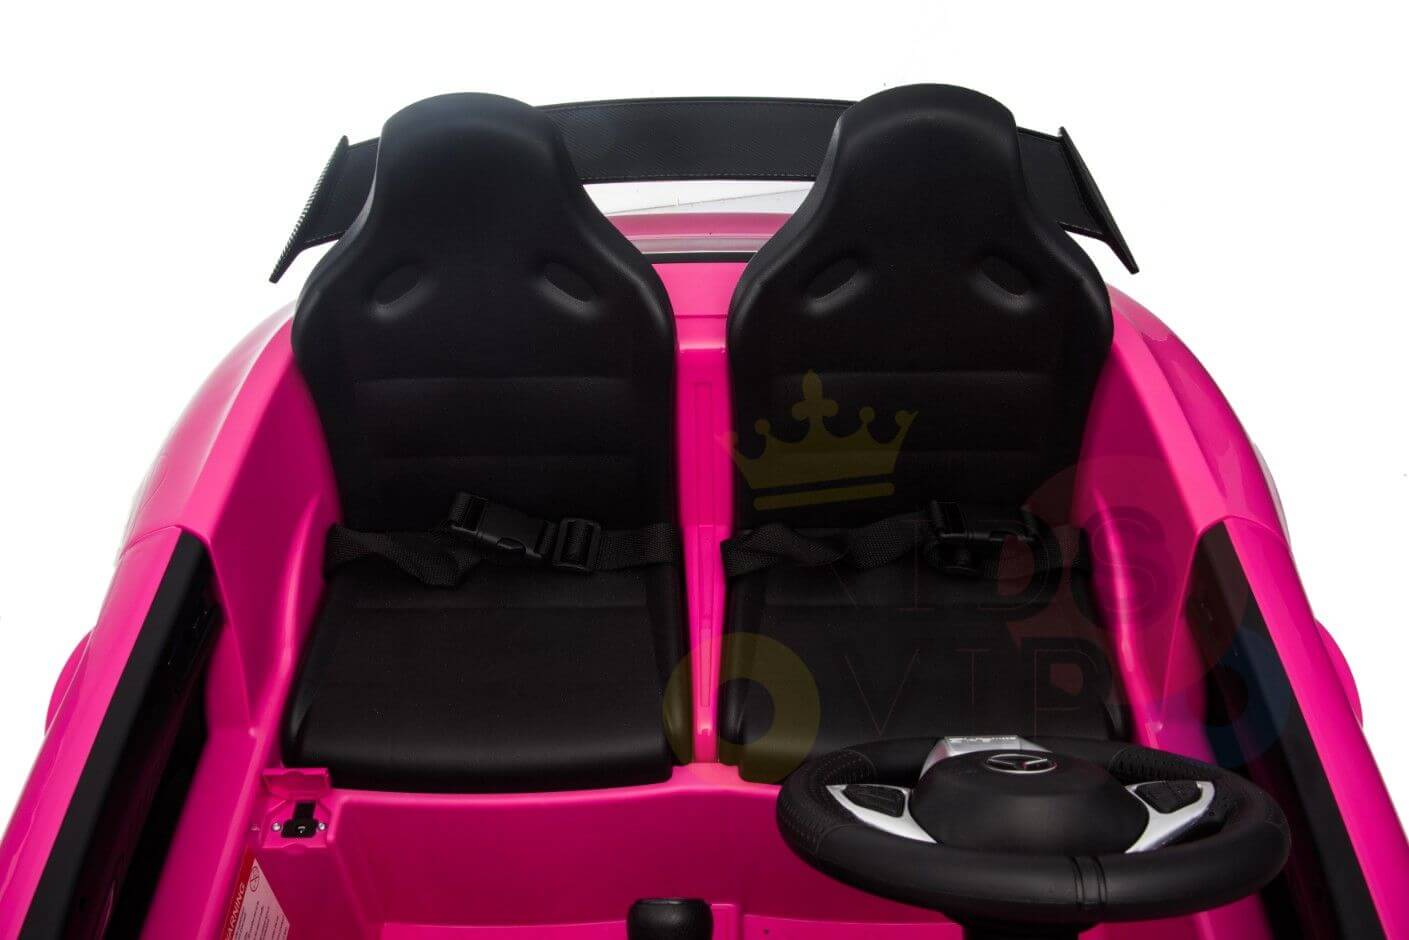 Premium Edition Mercedes Benz GTR 2X12V,4WD Ride on Car RC - Pink